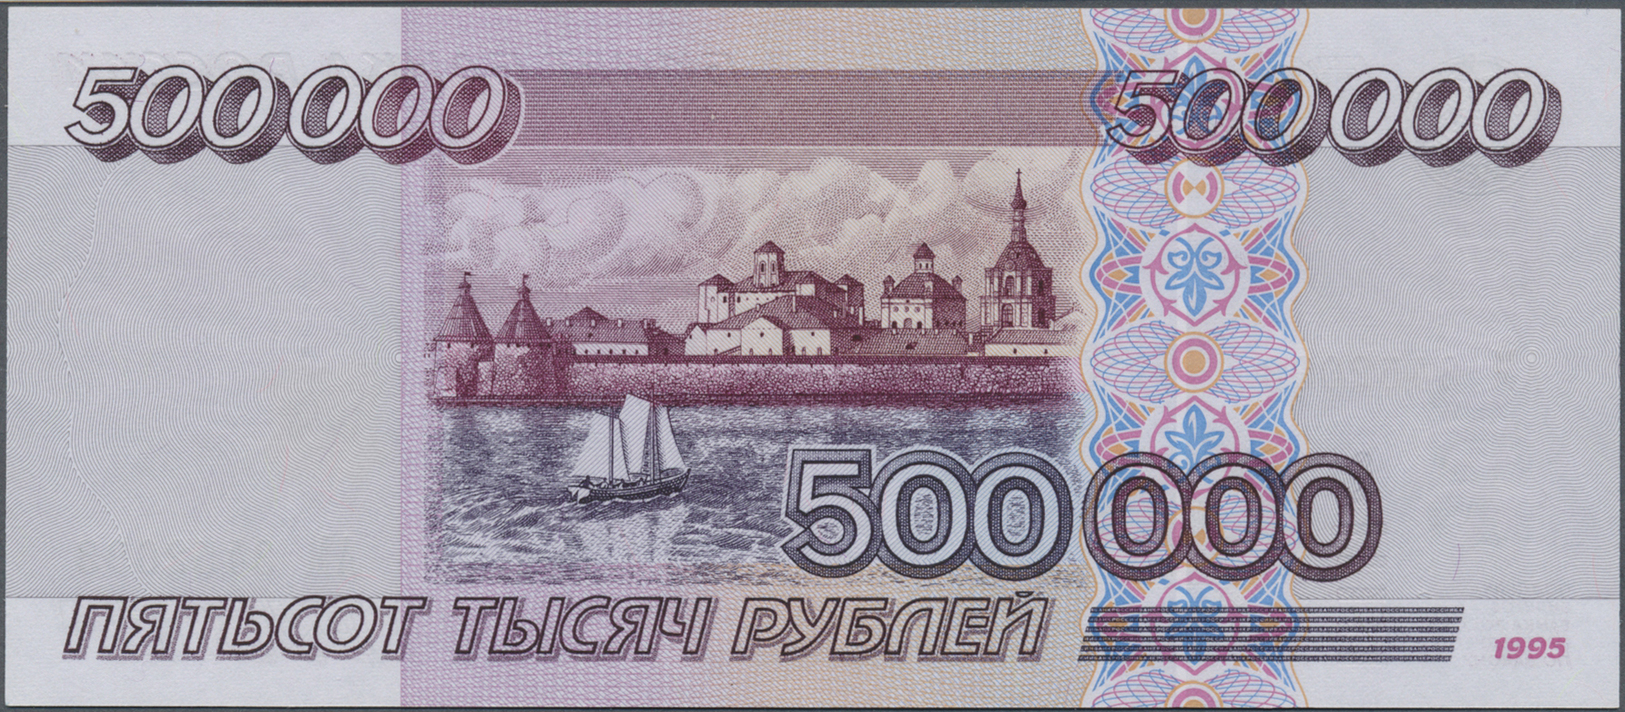 02218 Russia / Russland: 500.000 Rubles 1995 (ND1997) P. 266, Condition: PMG Graded 66 GEM UNC EPQ. - Russia